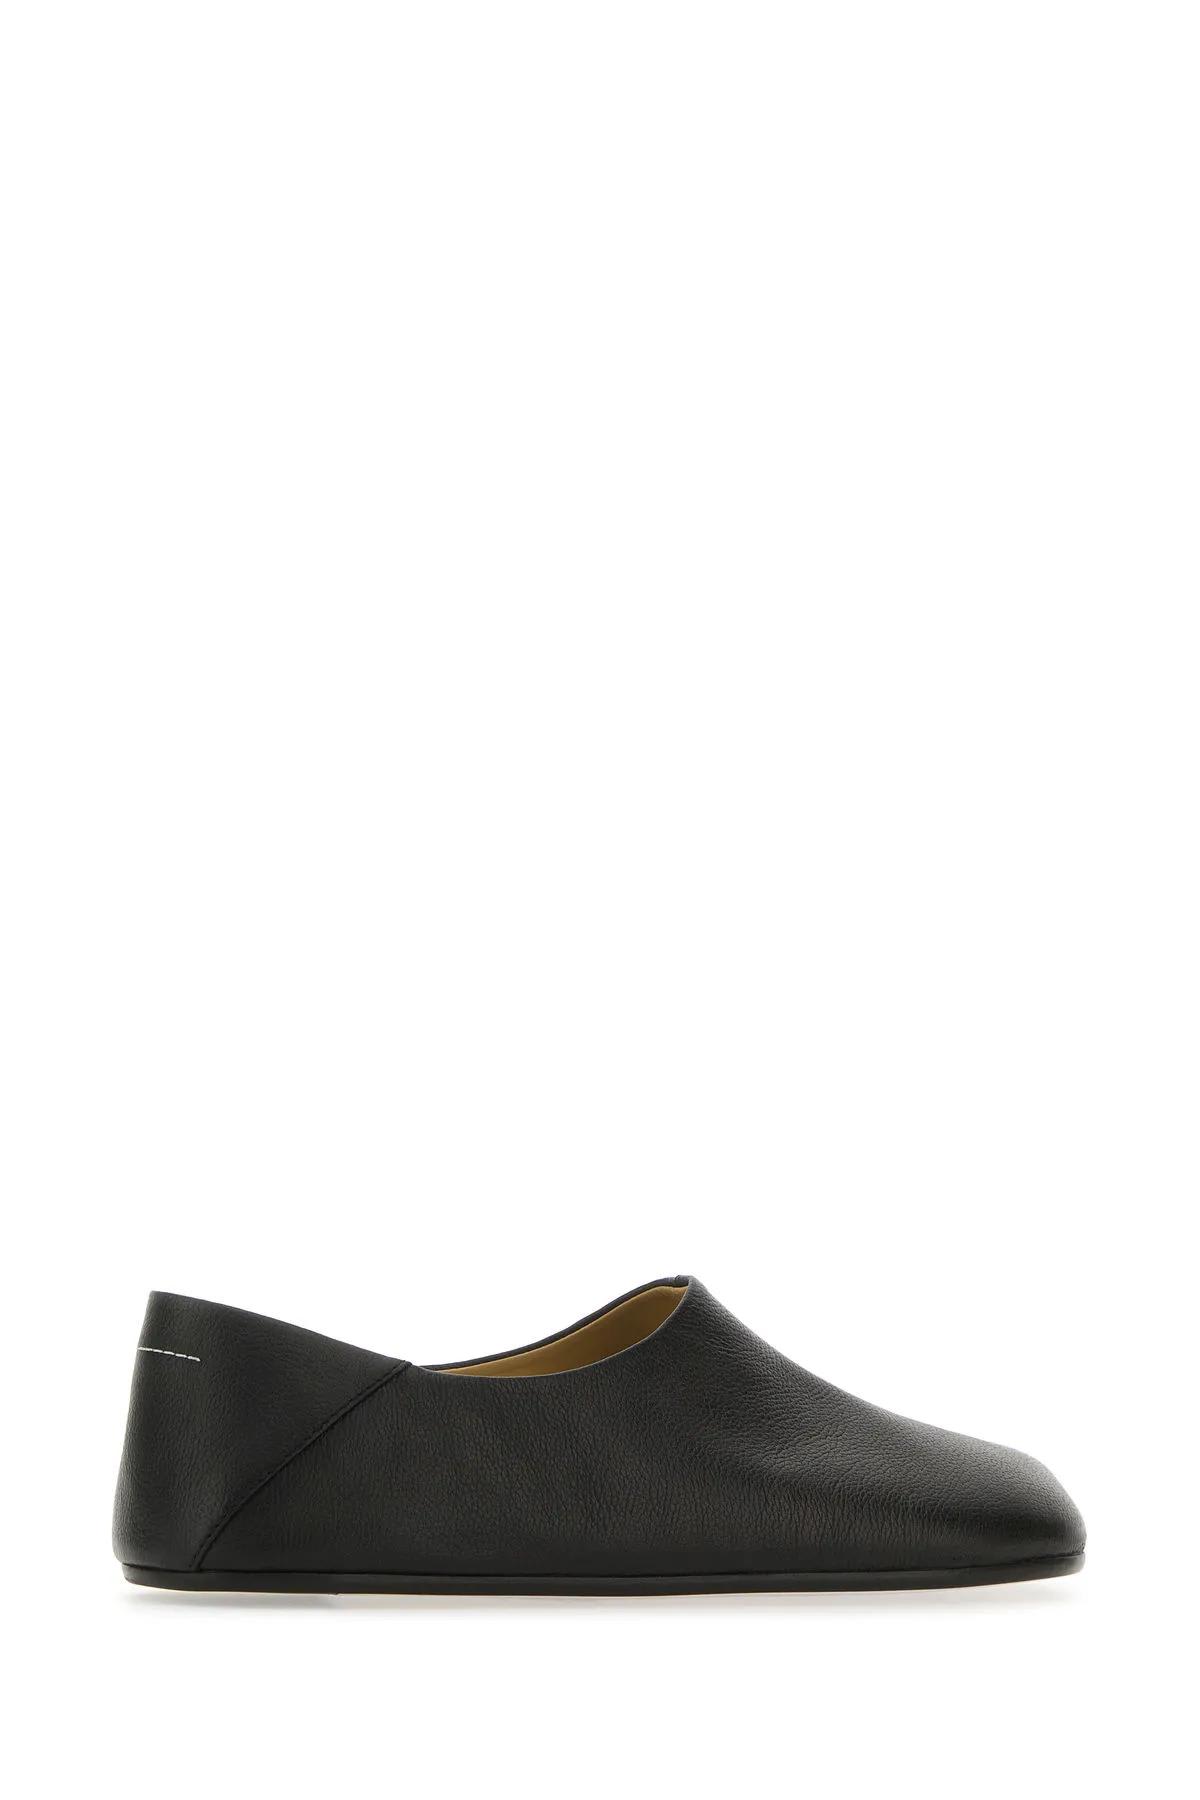 Shop Mm6 Maison Margiela Black Leather Loafers